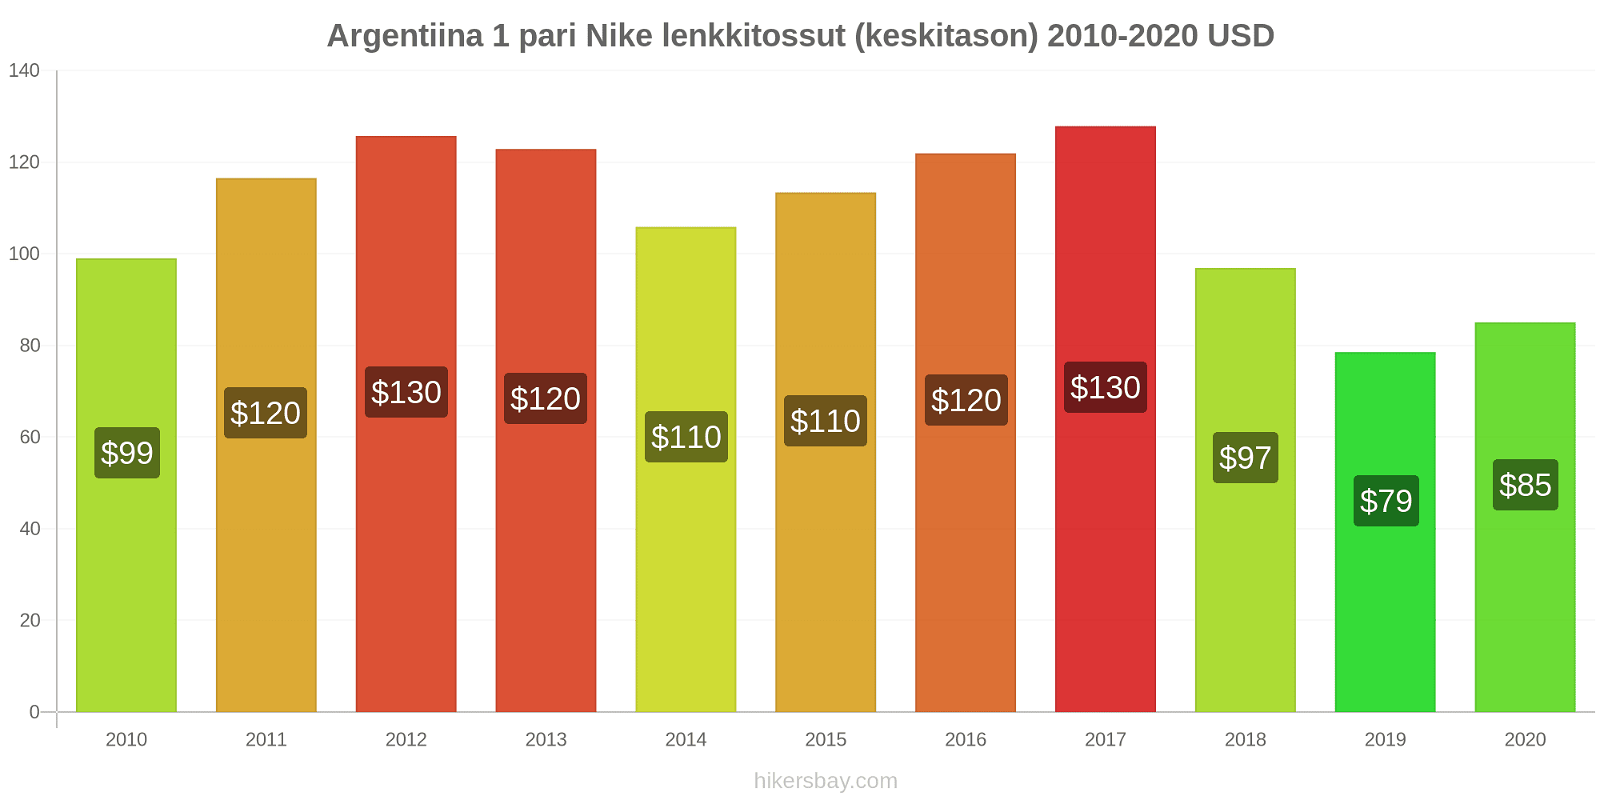 Argentiina hintojen muutokset 1 pari Nike lenkkitossut (keskitason) hikersbay.com